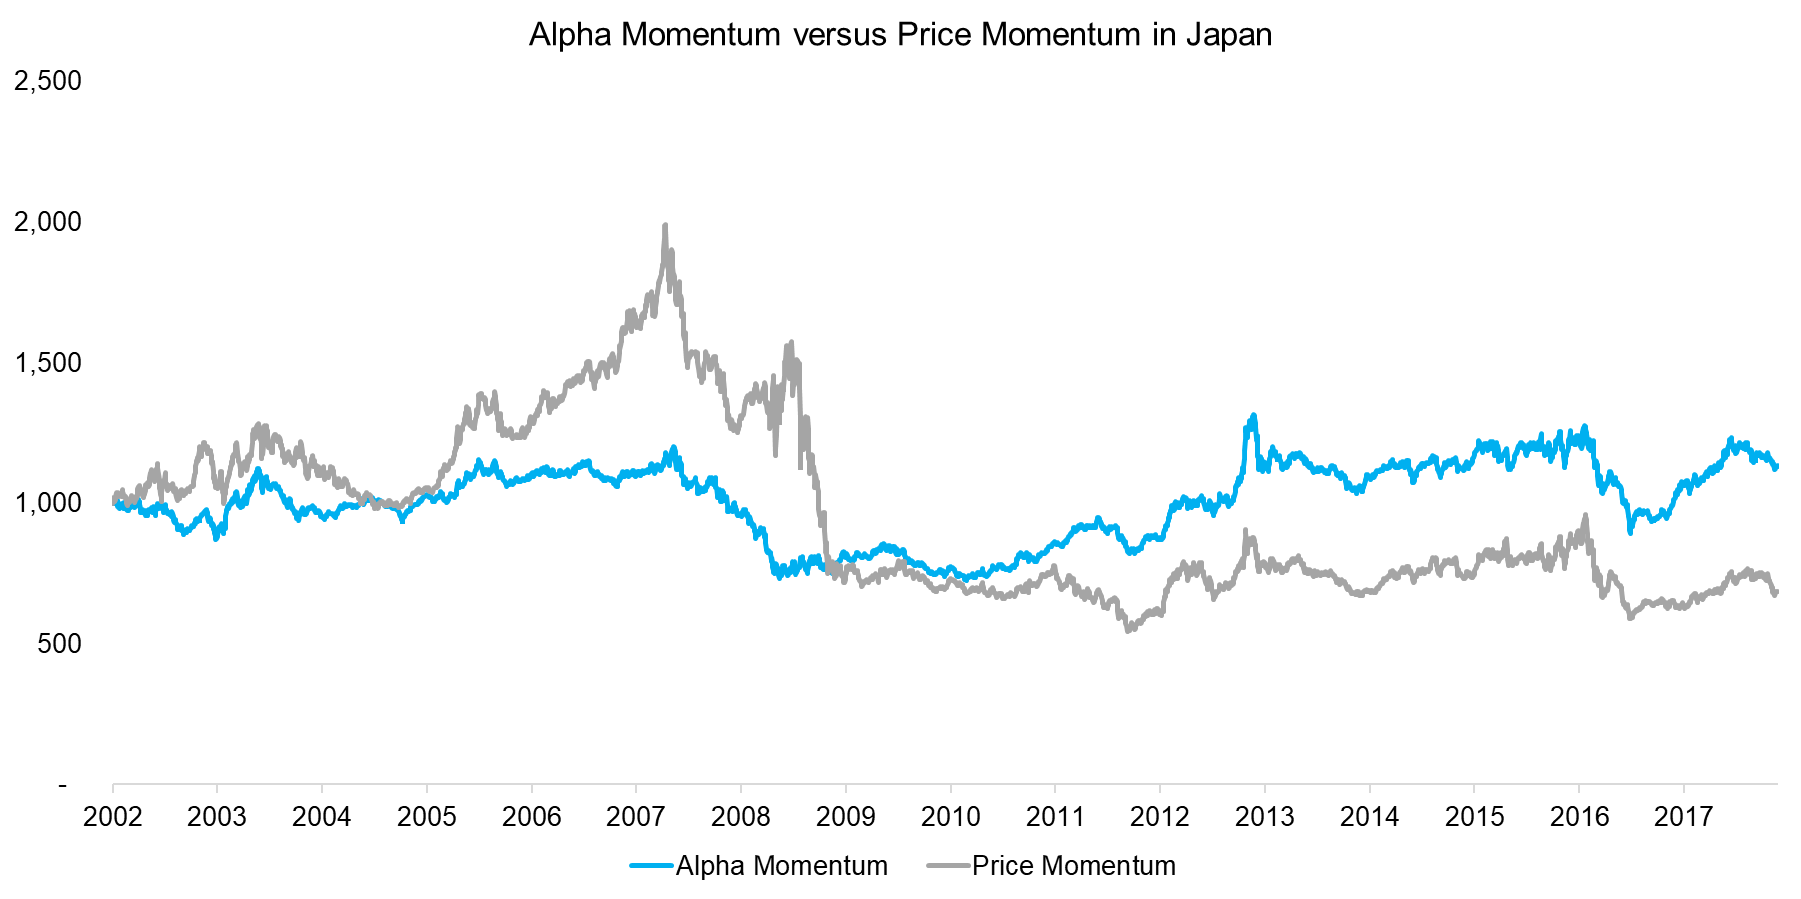 Alpha Momentum versus Price Momentum in the Japan